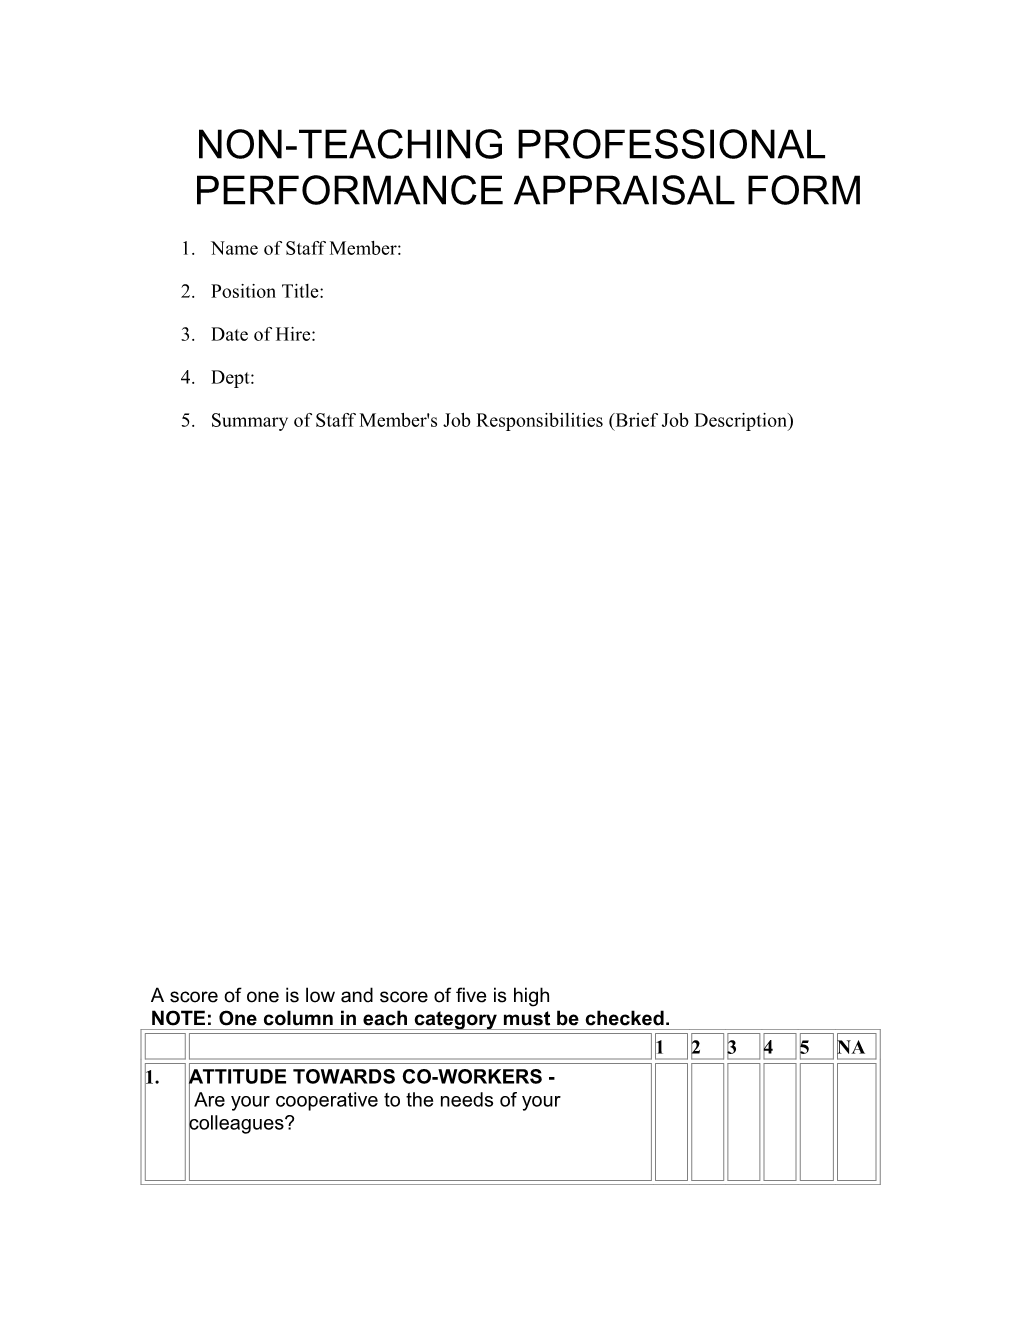 Non-Teaching Professional Performance Appraisal Form